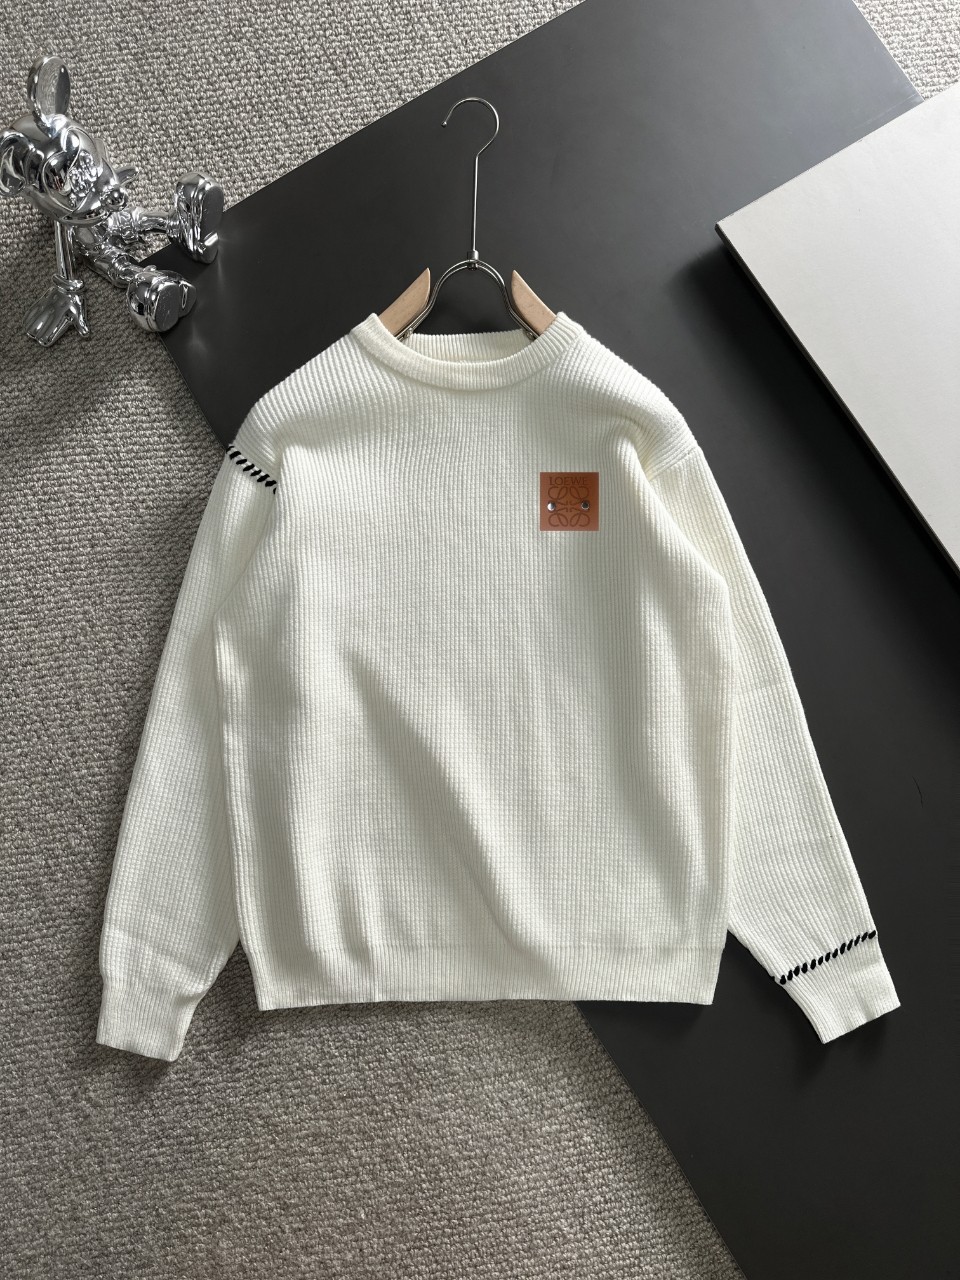 Loewe Clothing Sweatshirts Embroidery Wool Winter Collection Fashion